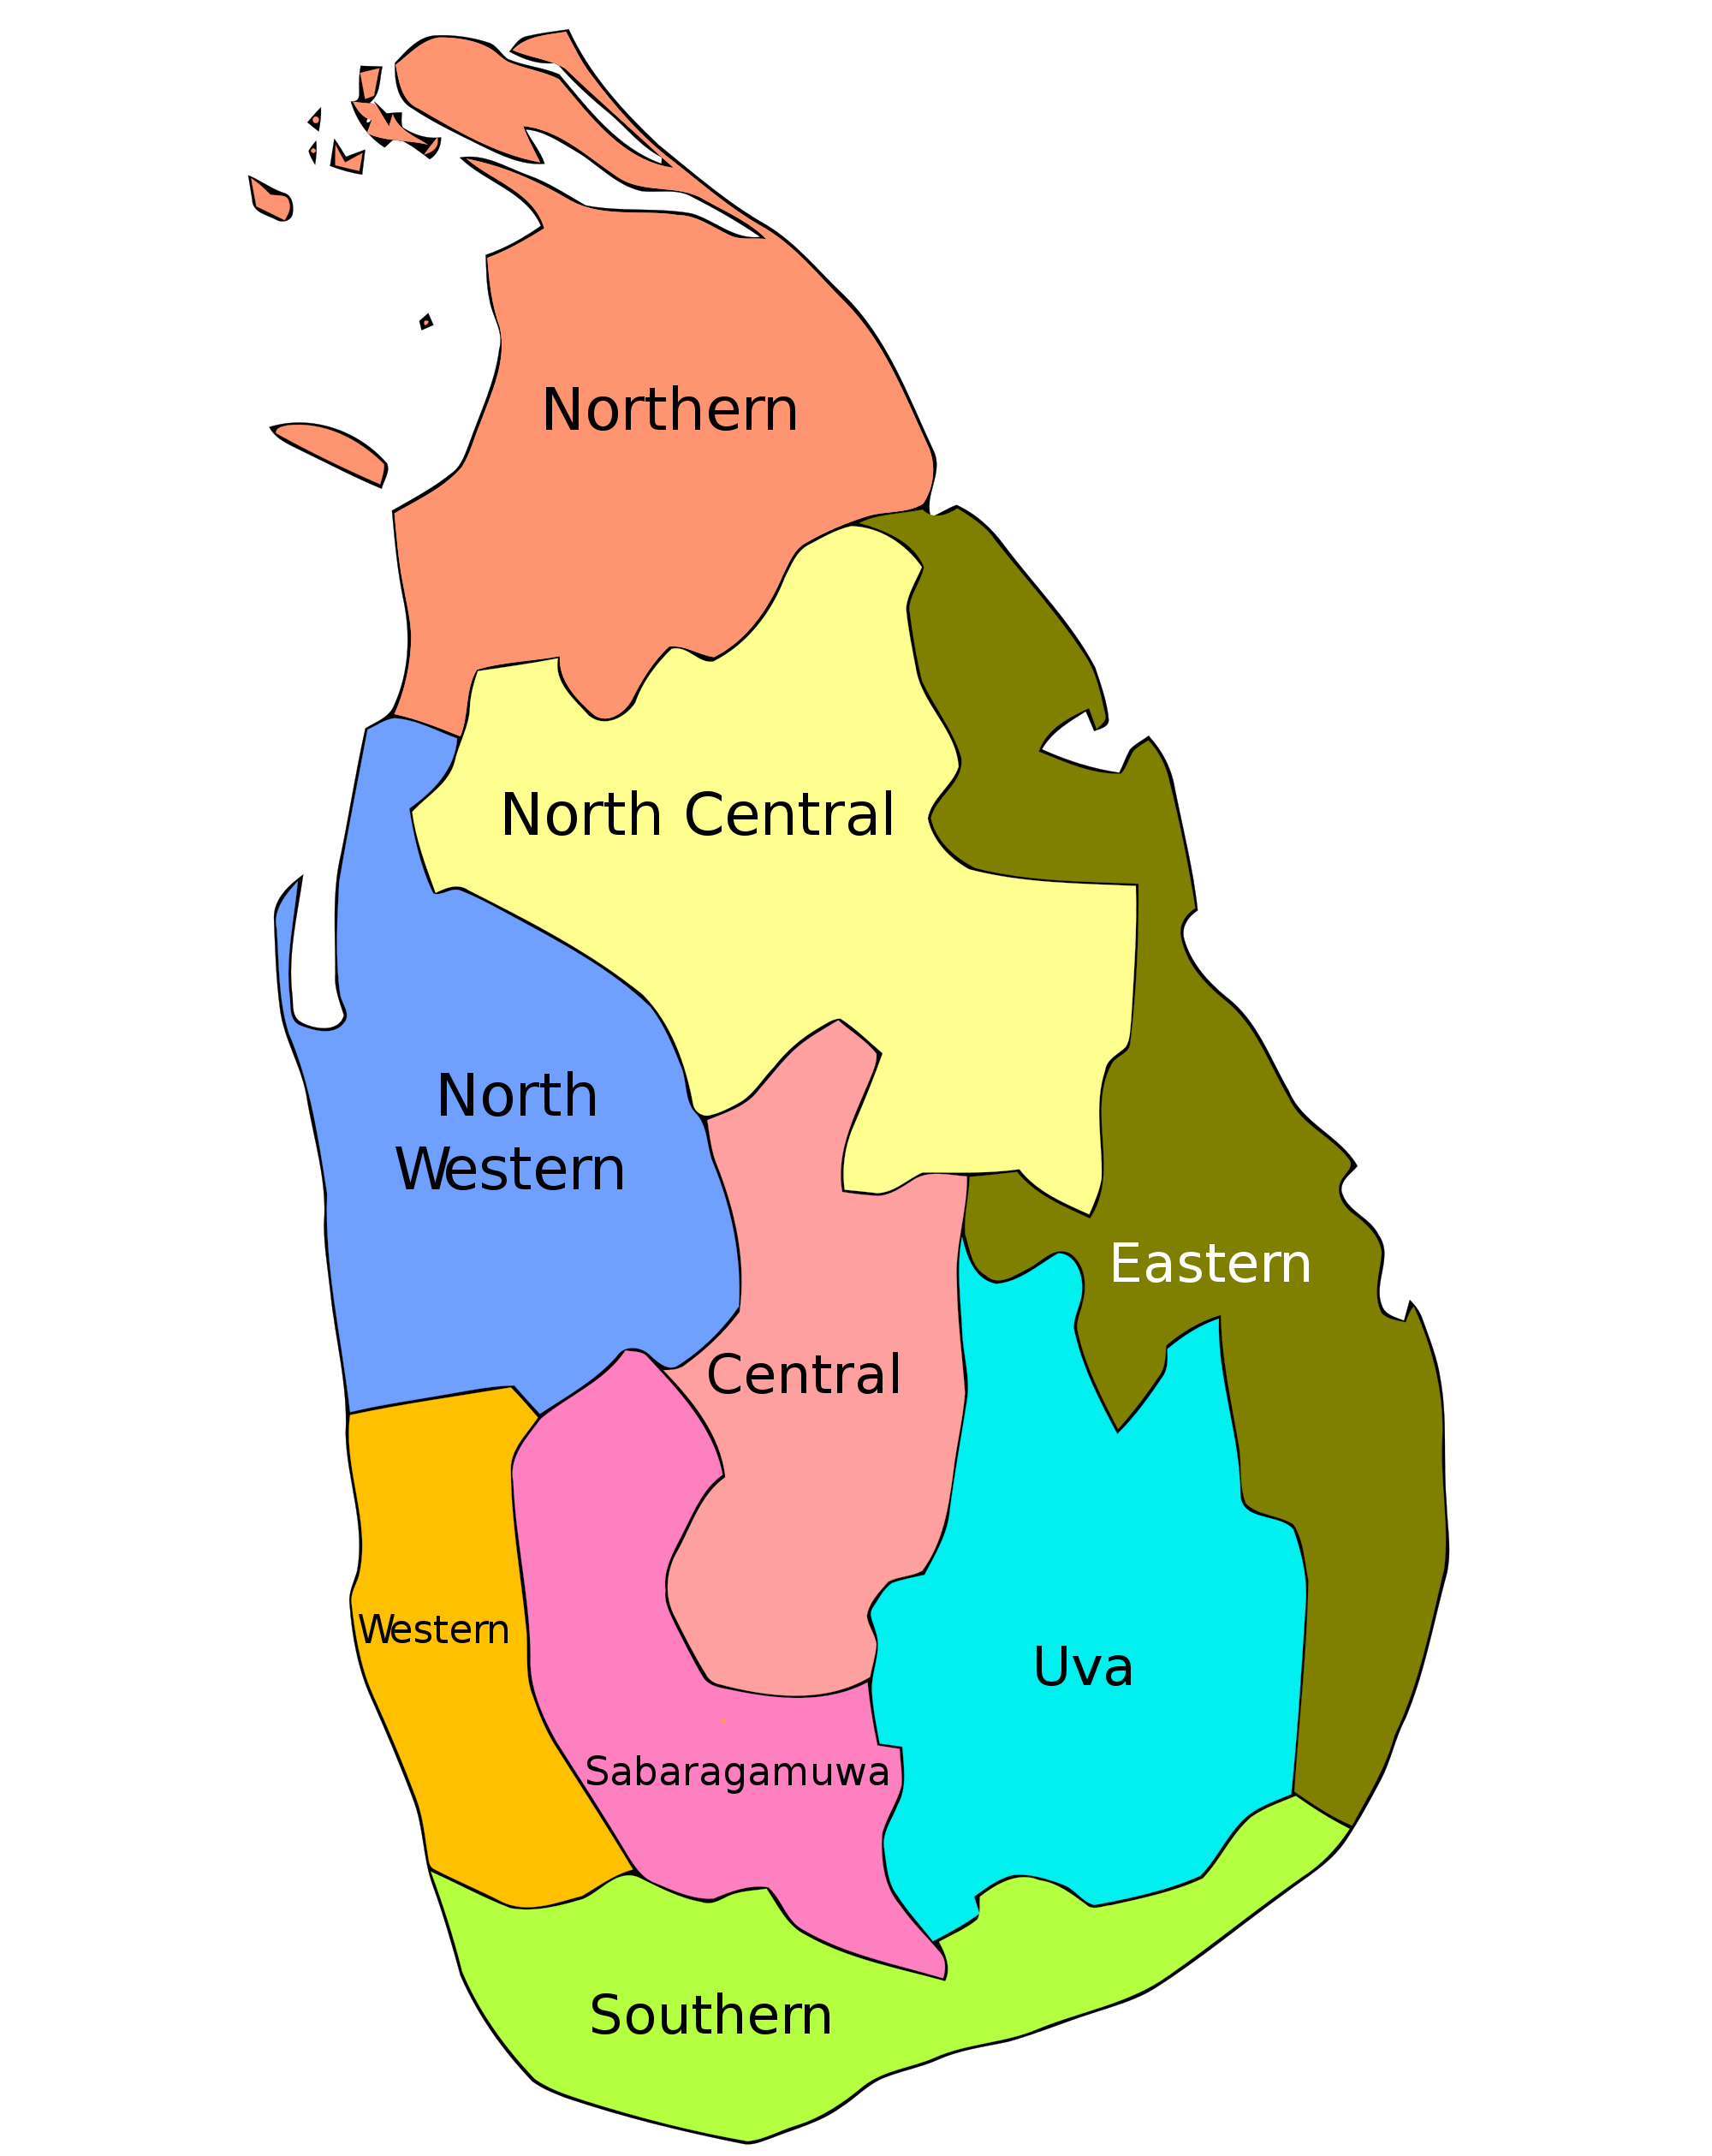 Provinces of Sri Lanka (photo credit: Wikipedia)